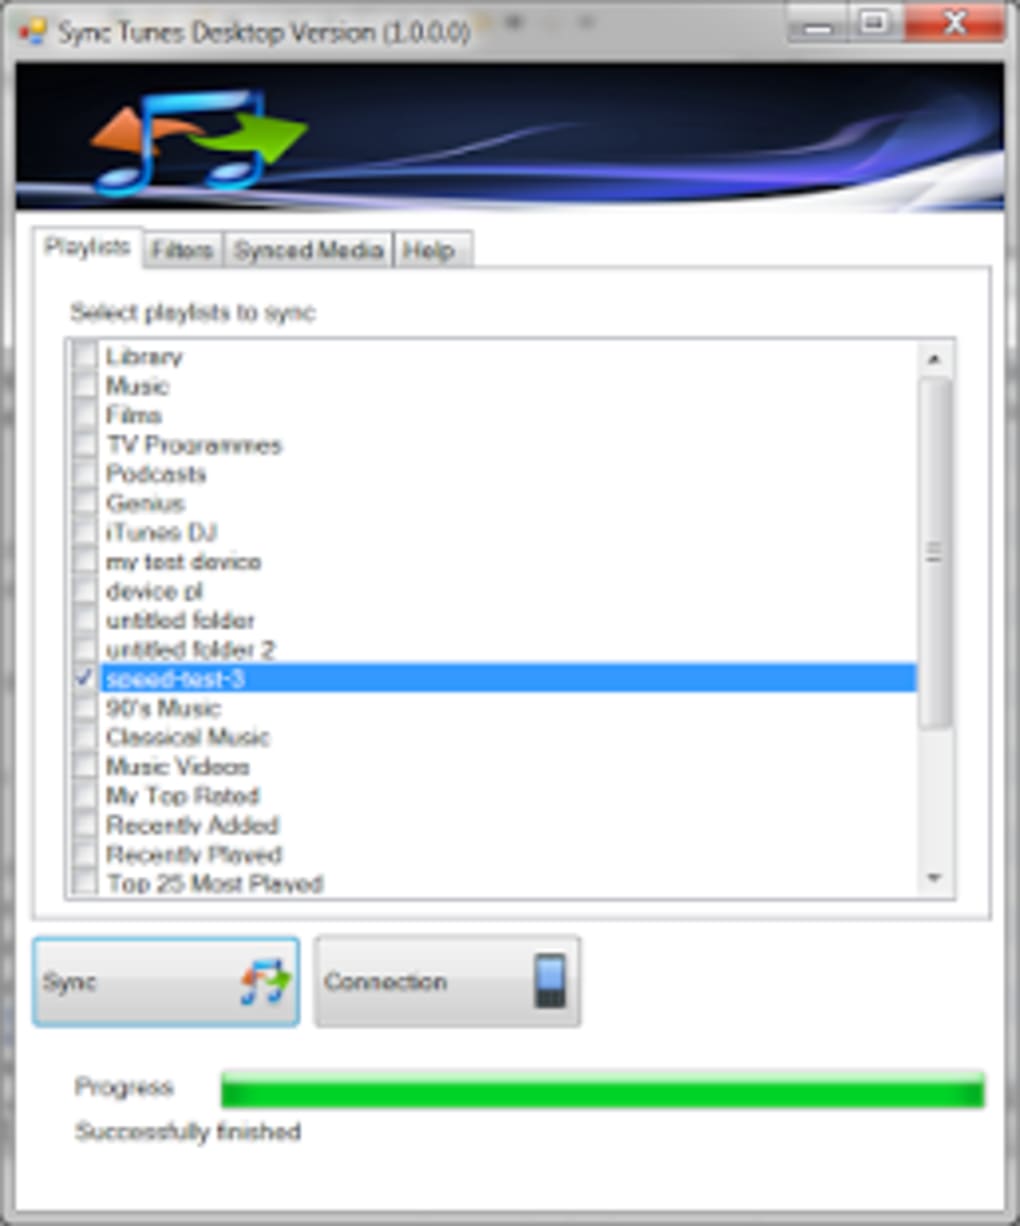 activesync windows 7 64 bit download